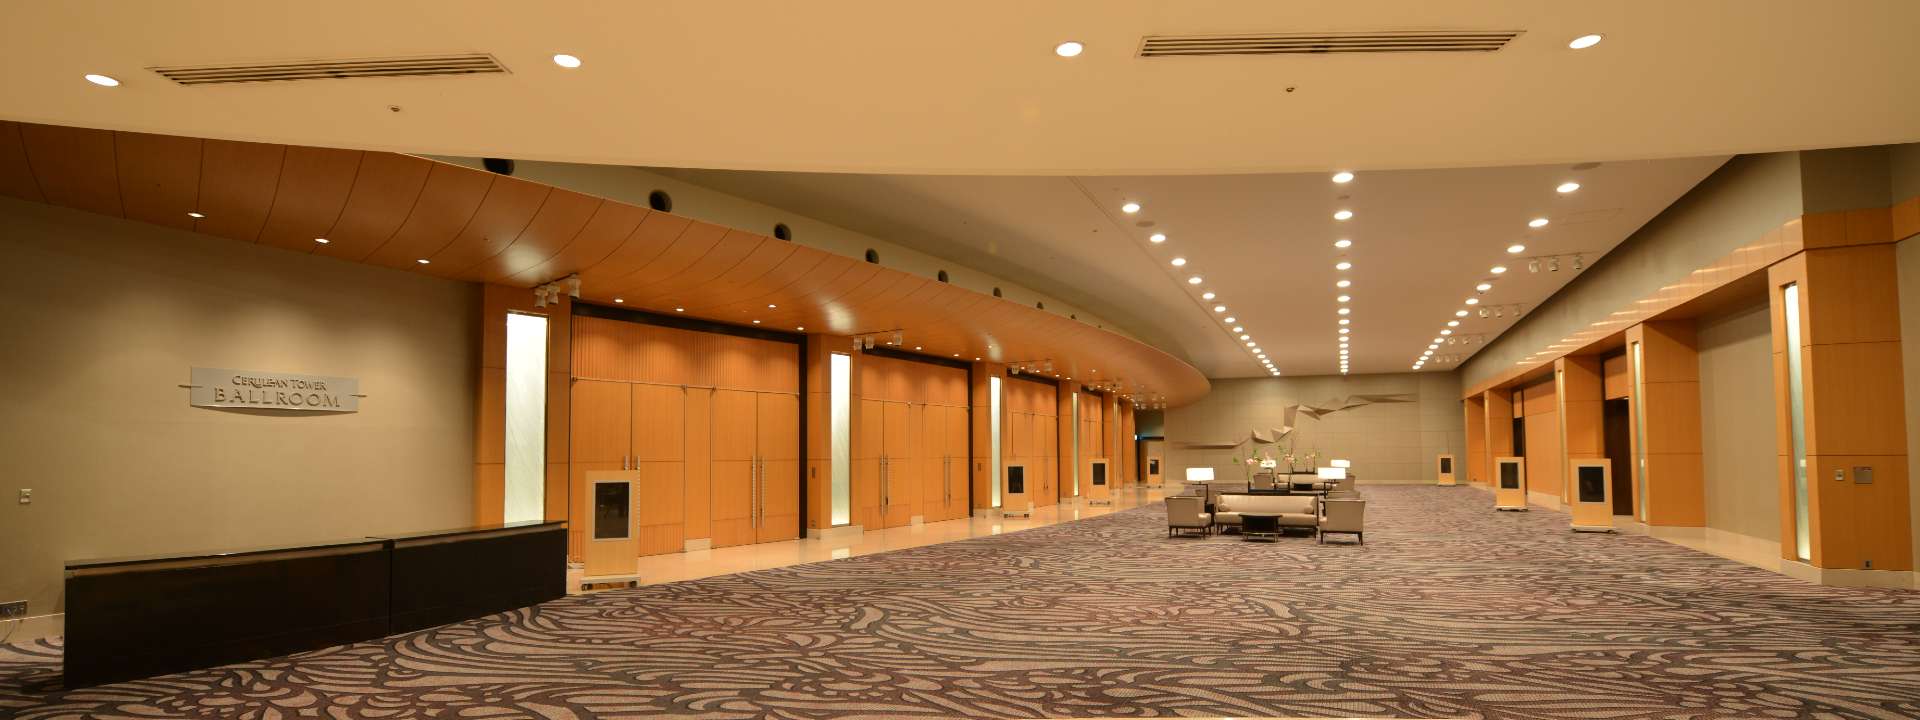 Banquet hall/foyer